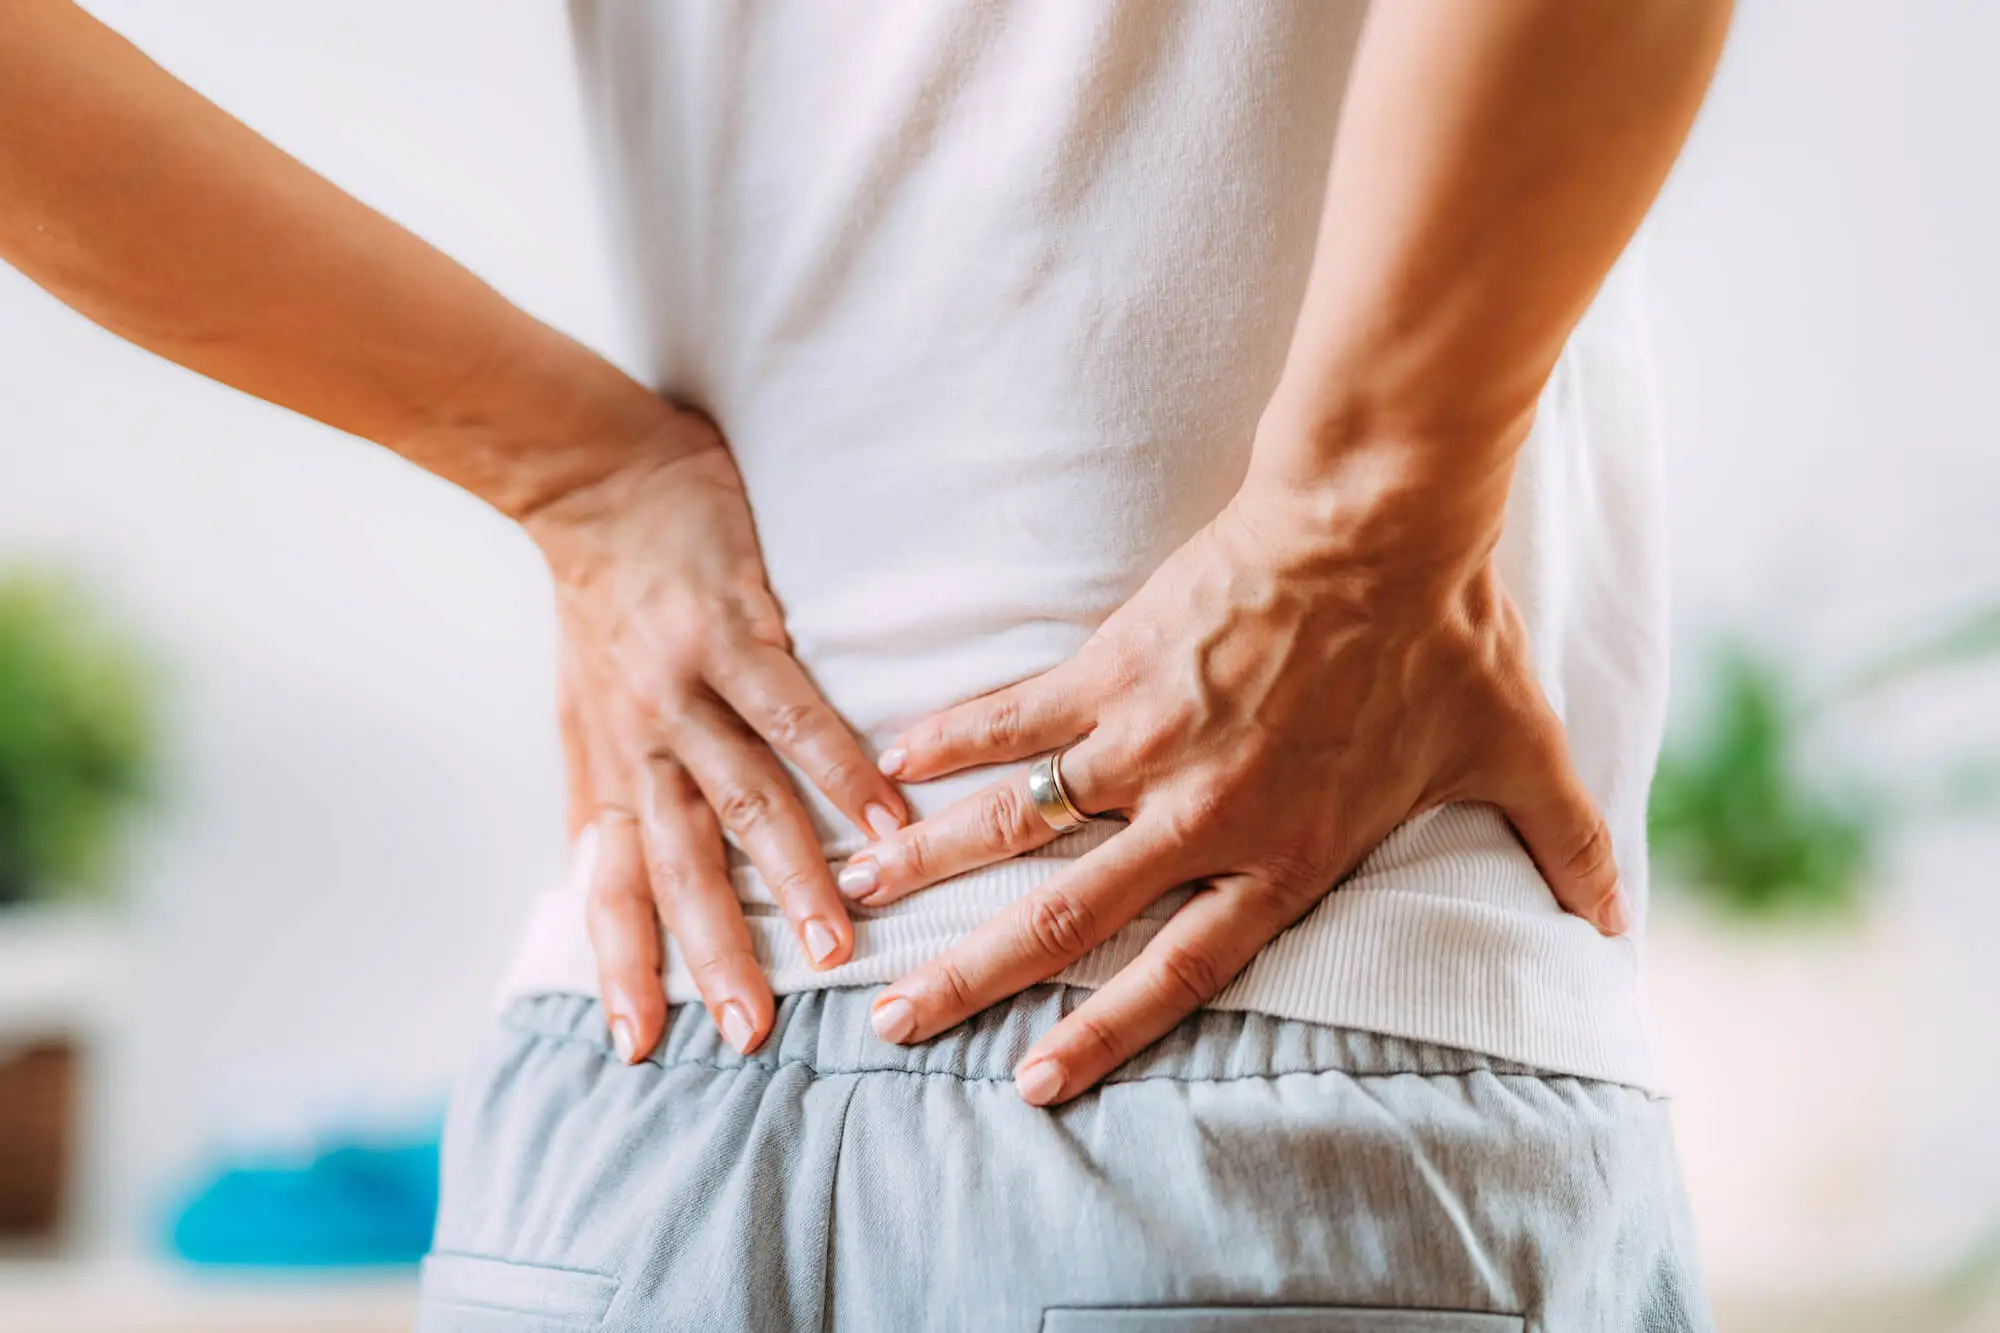 What Causes Sciatica and Buttock Pain? – Neuragenex